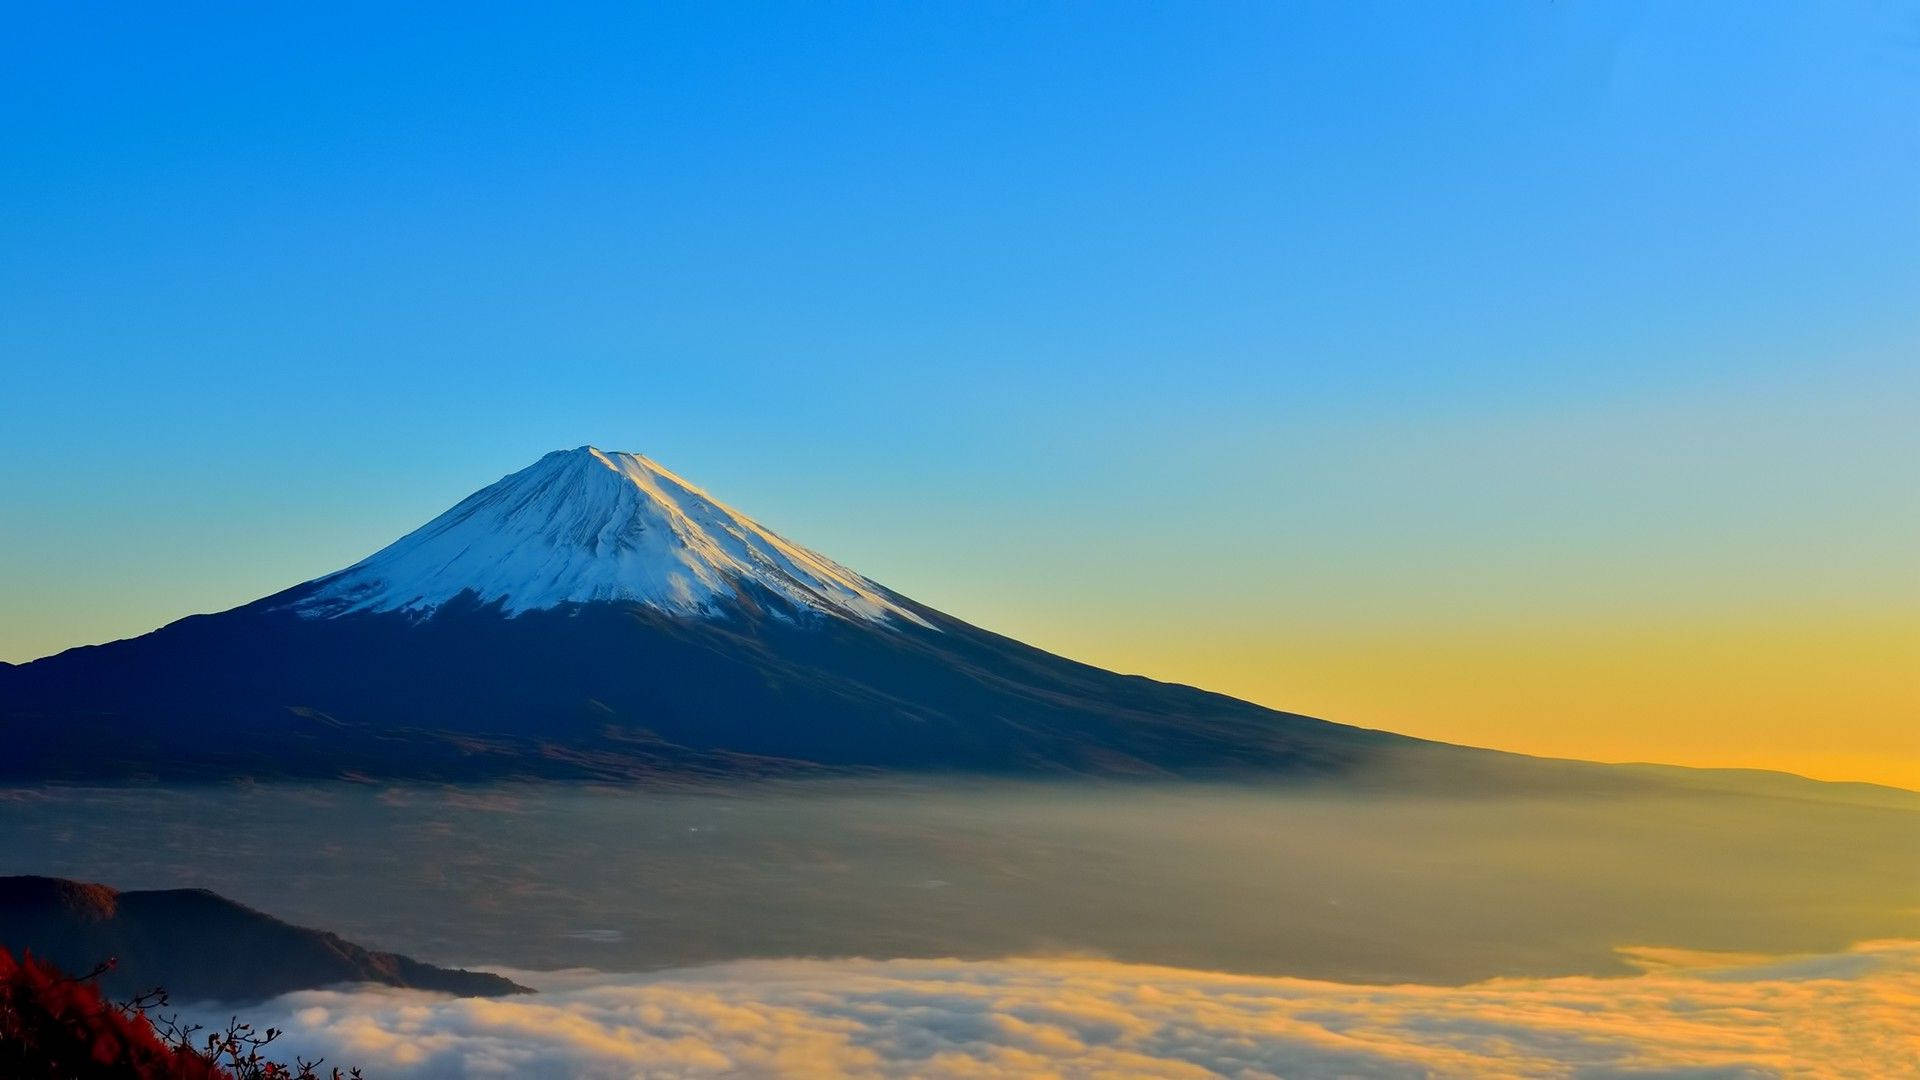 Caption: Majestic Mount Fuji In Autumn